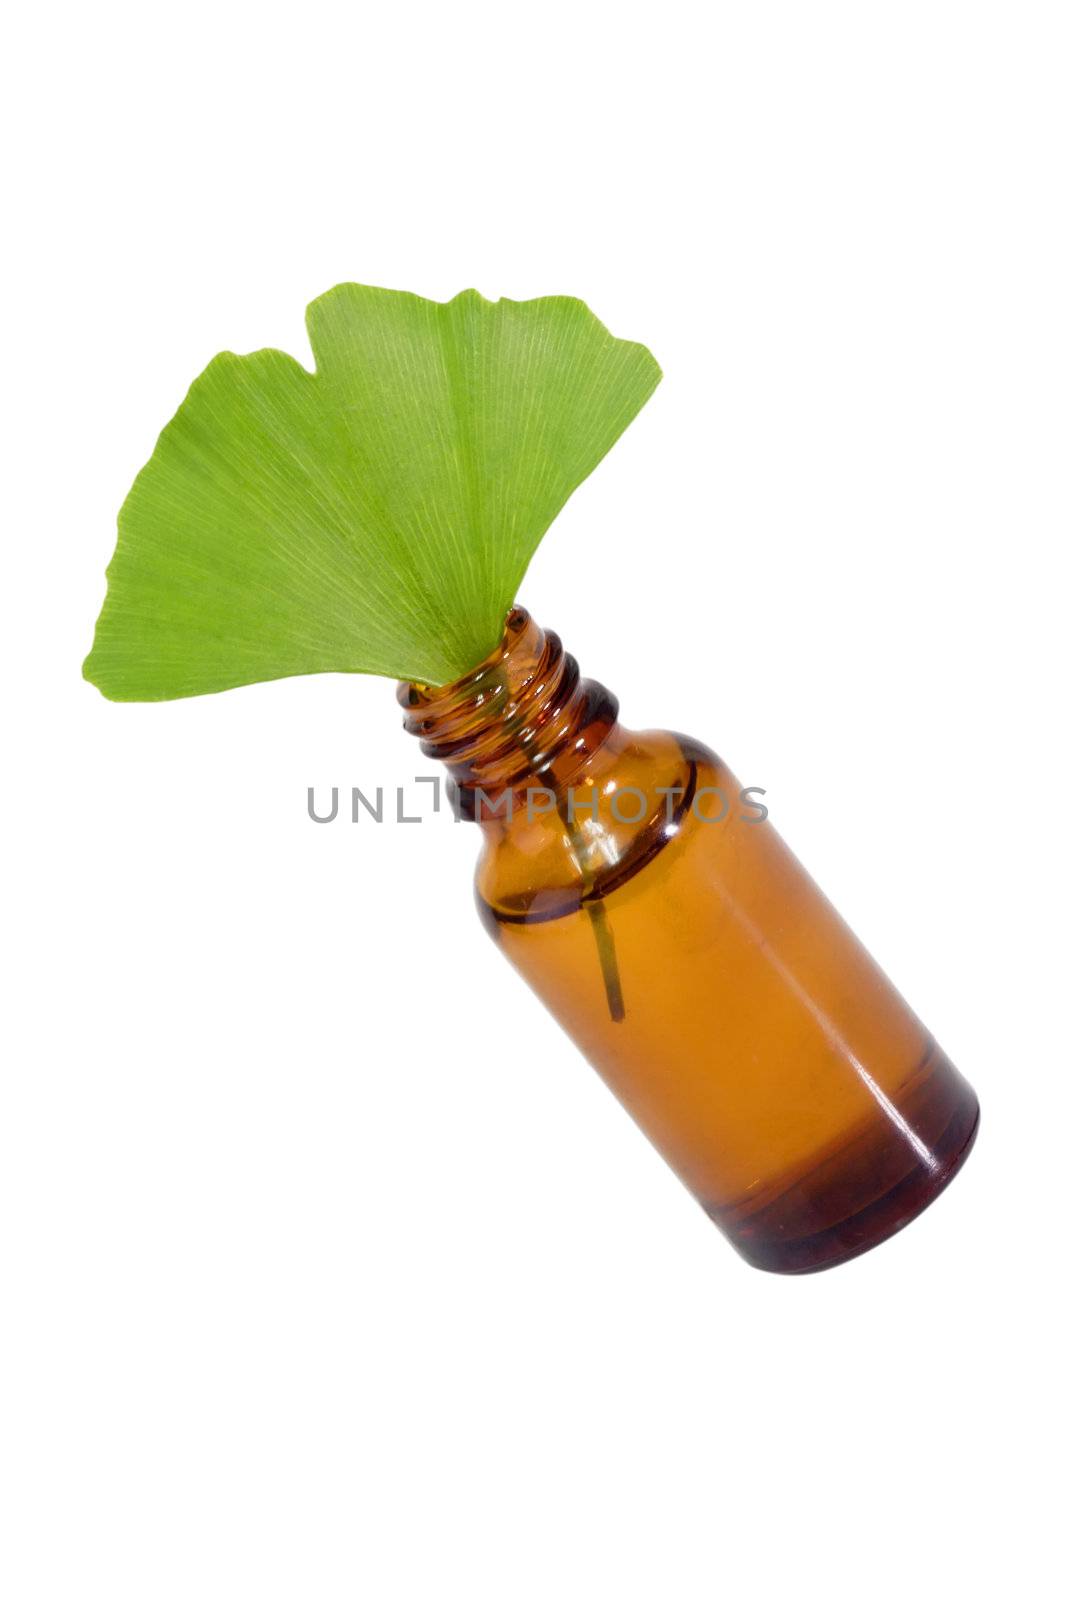 Fresh Ginkgo Biloba leaf with a brown medicine bottle.